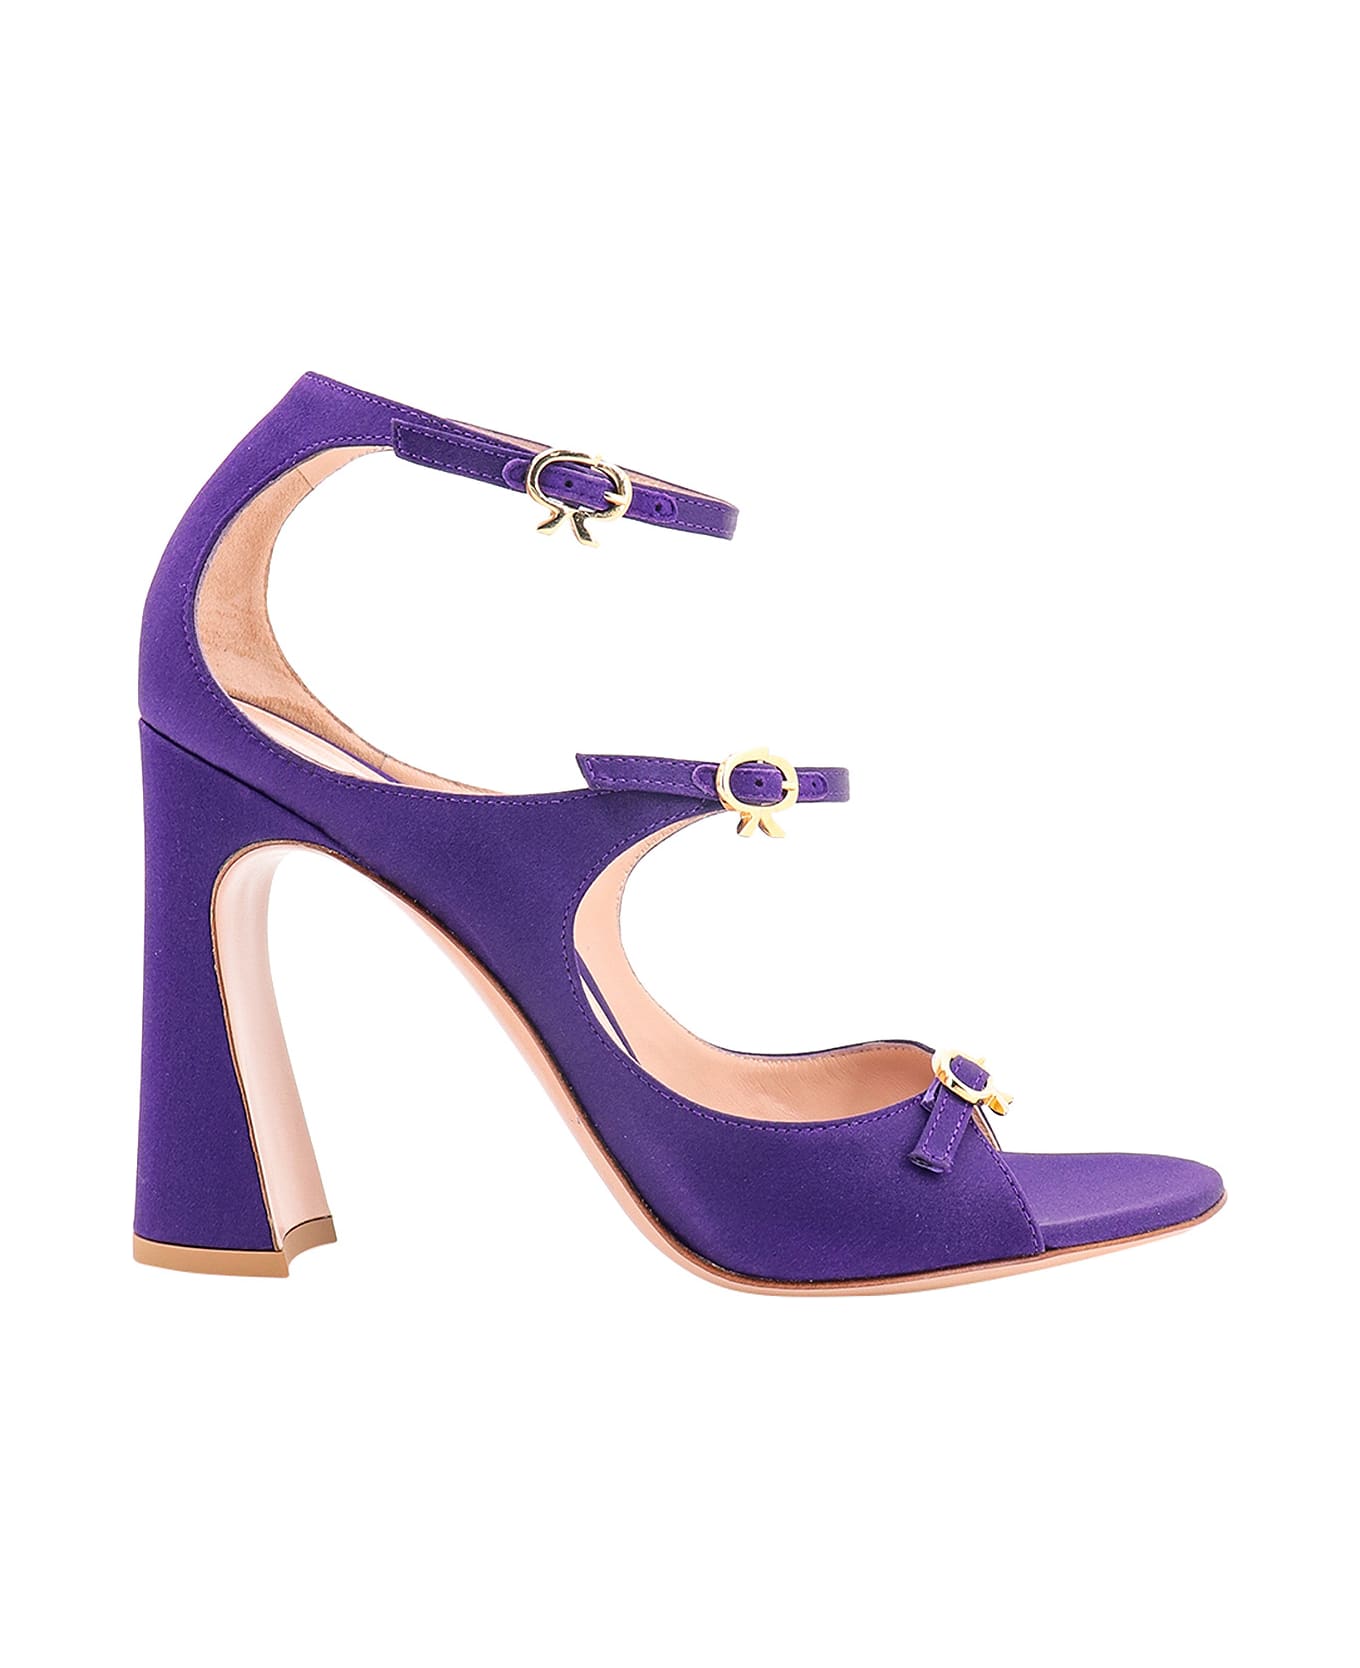 Gianvito Rossi Misty Sandals - Purple サンダル